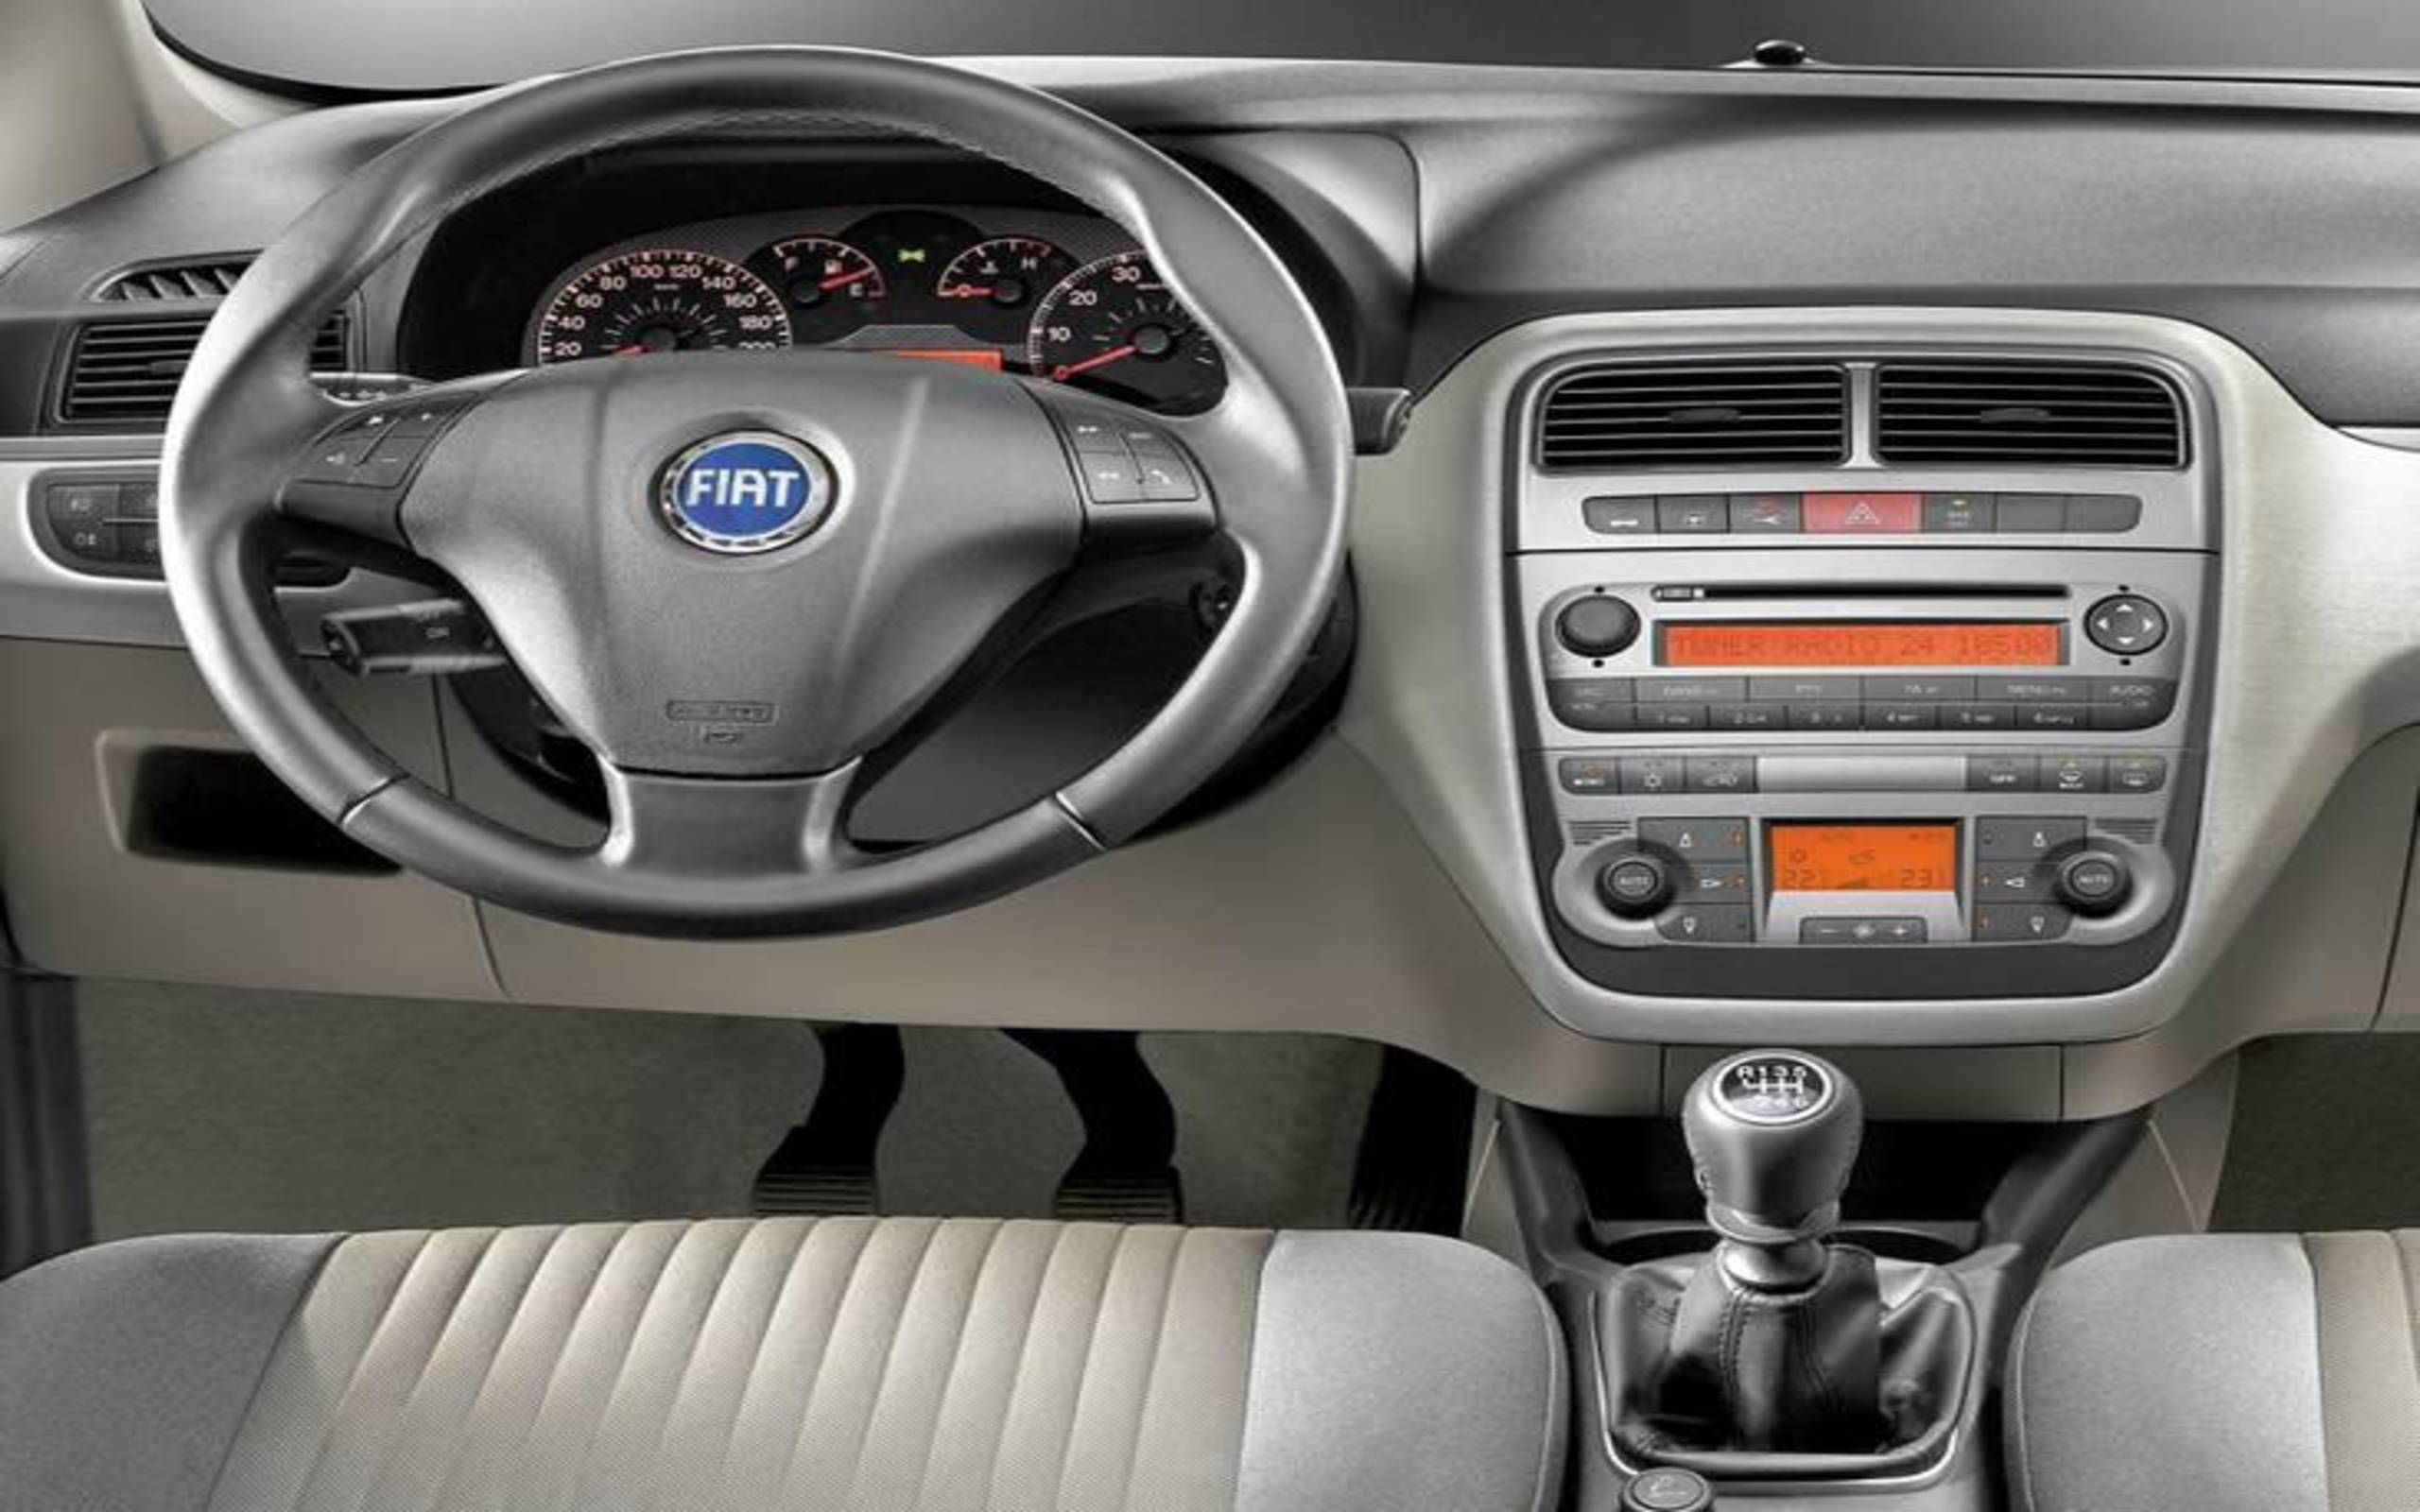 Used Fiat Grande Punto Hatchback (2006 - 2010) interior